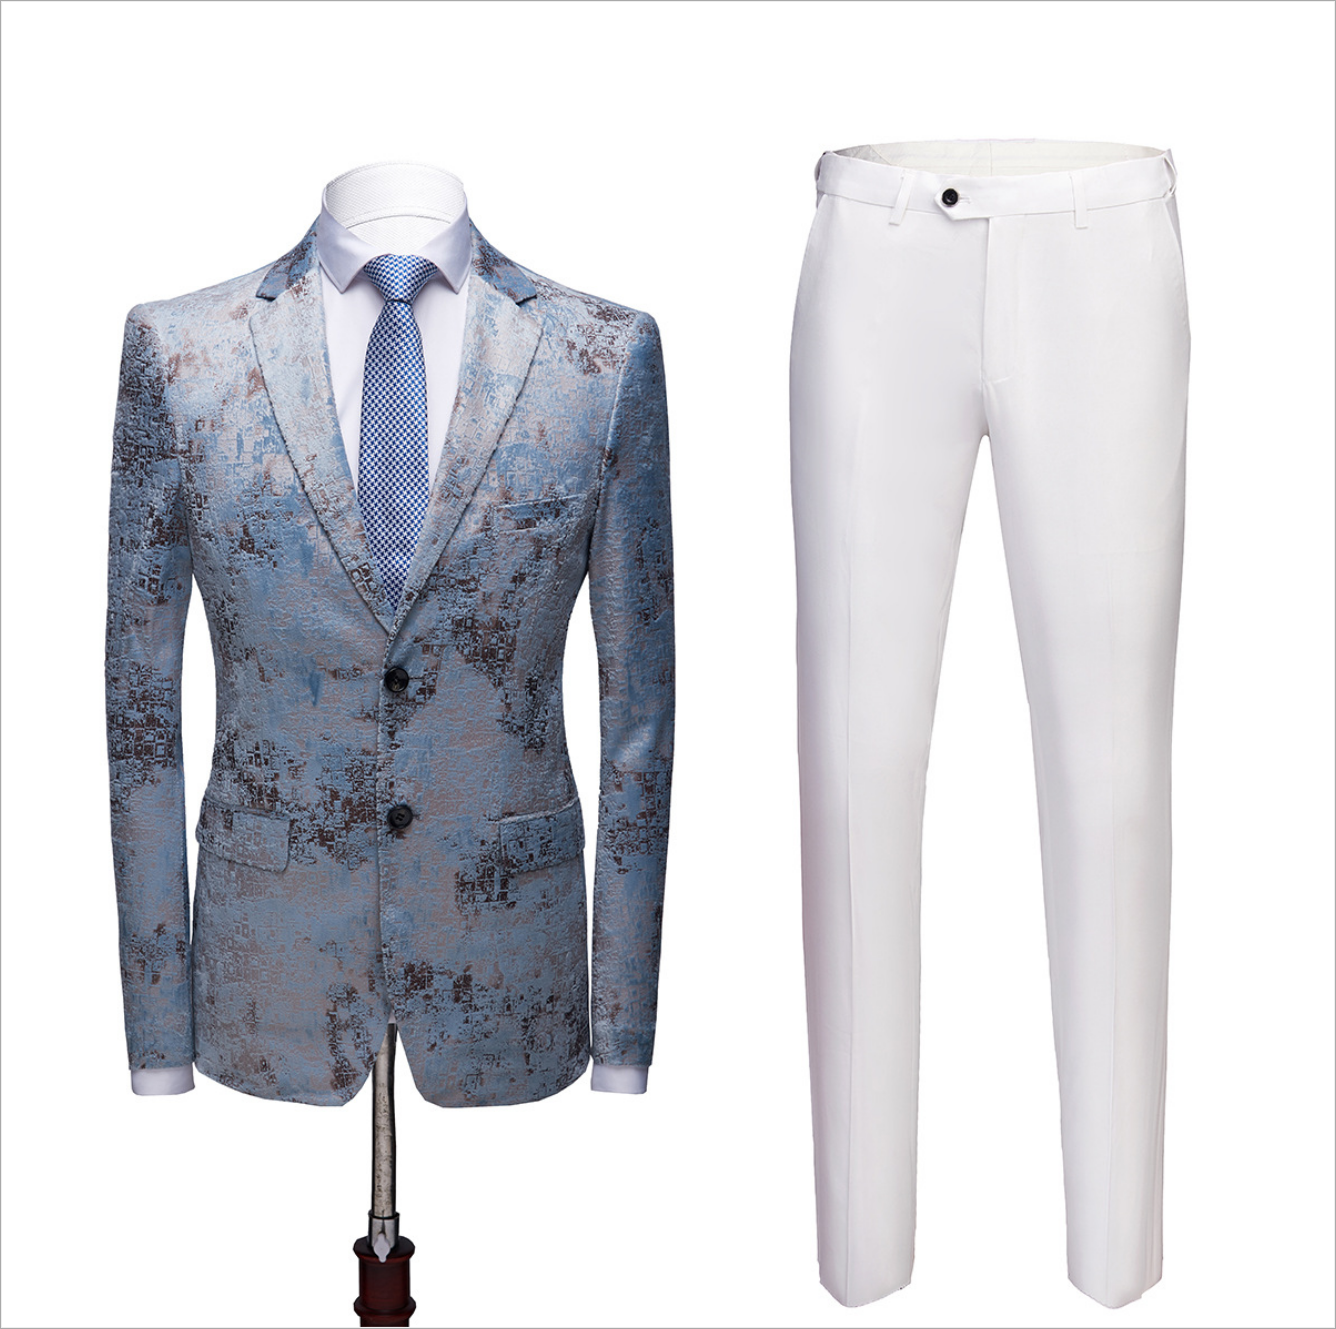 Classy Blue Notched Lapel Wedding Suit for Men's Party with White Pants-Wedding Suits-BallBride